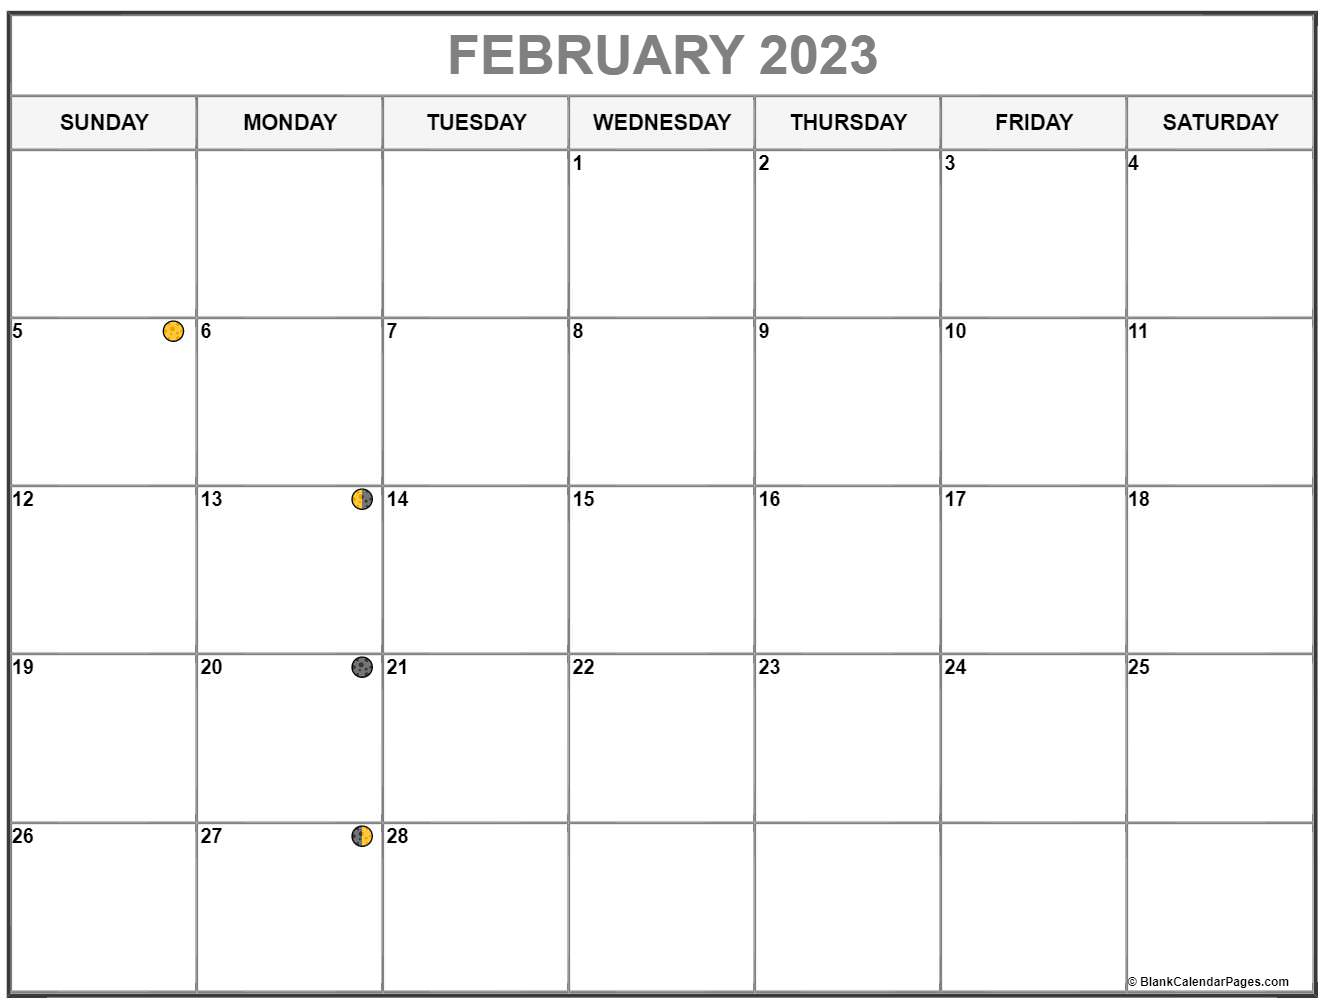 February 2023 Lunar Calendar Moon Phase Calendar